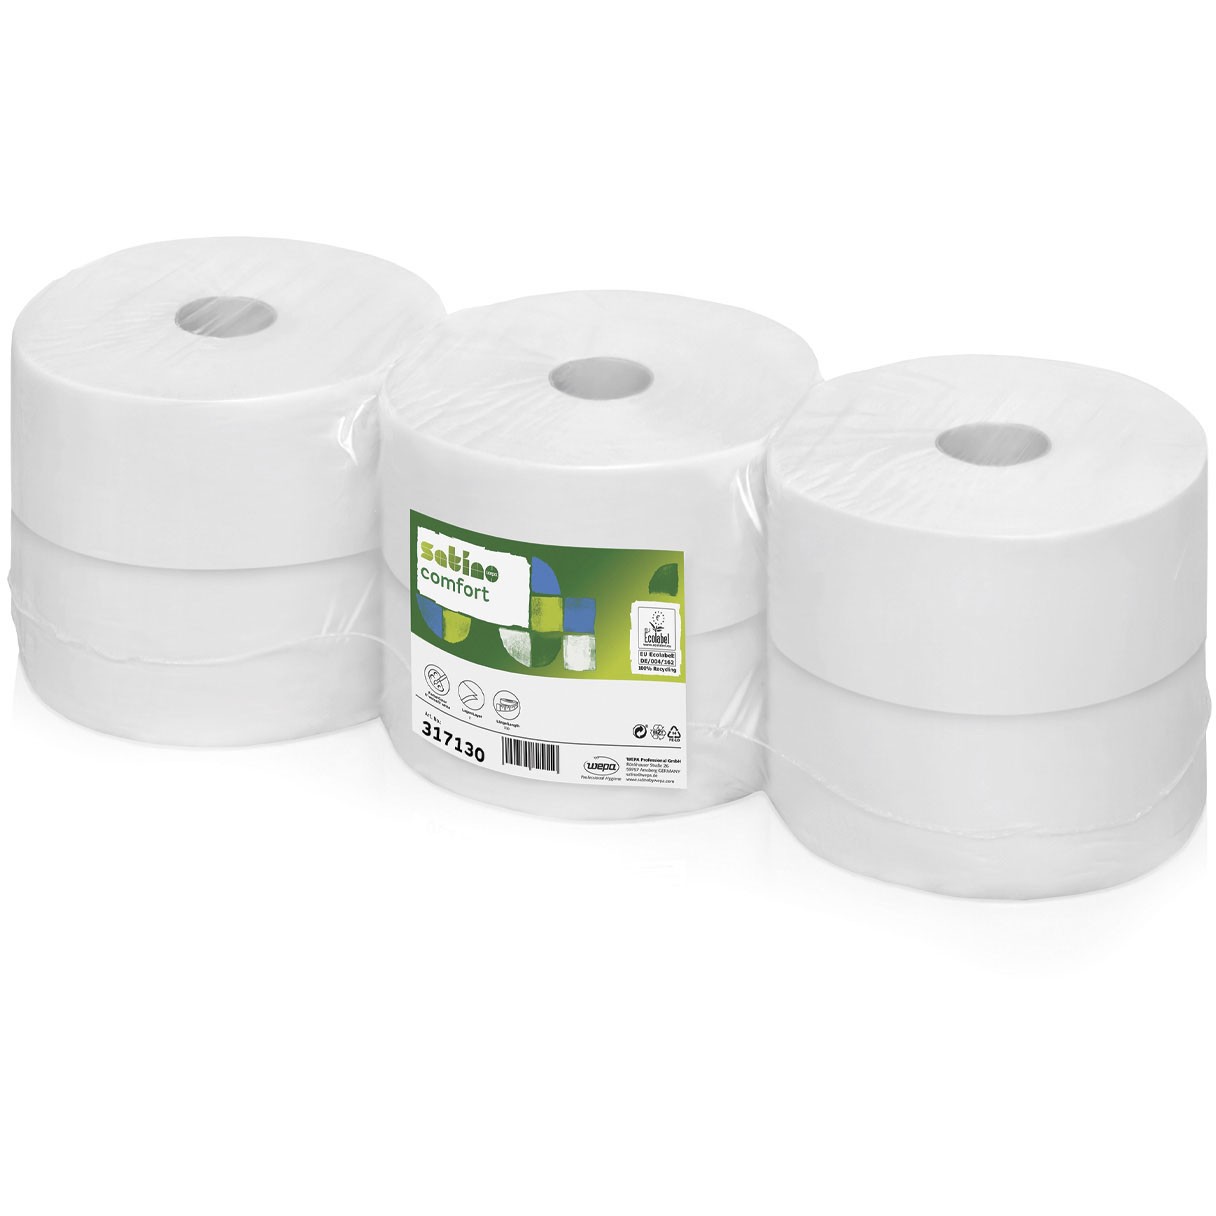 Satino Comfort Jumbo toiletpapir 2-lags 6rl